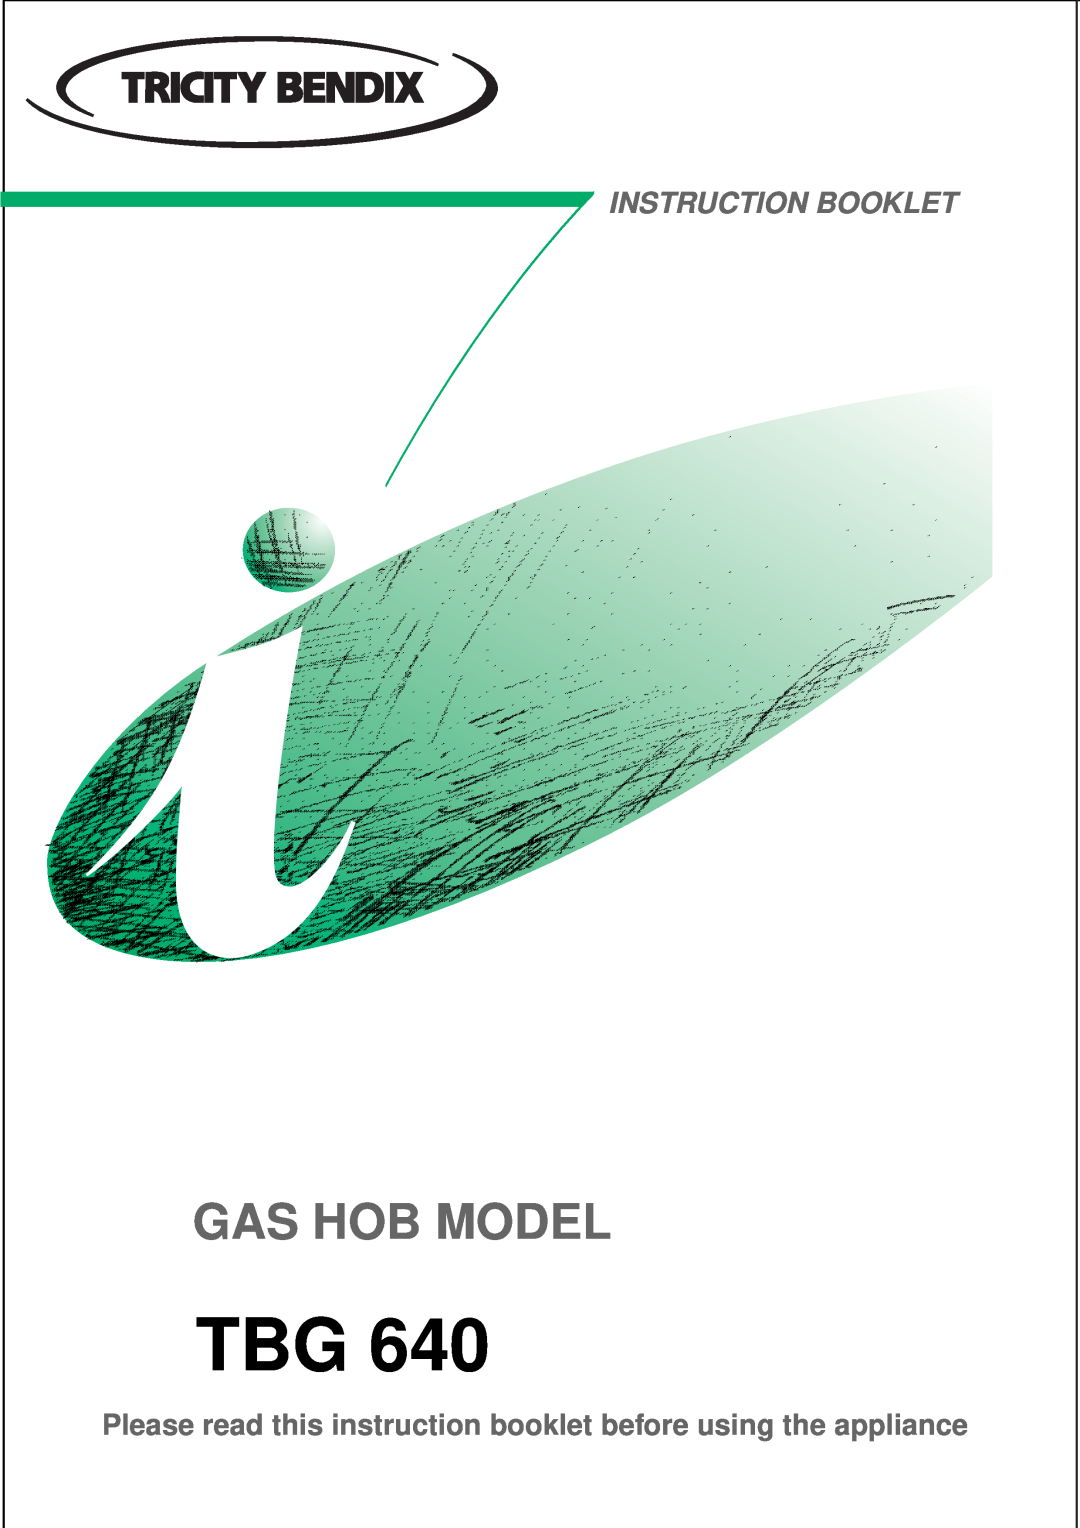 Tricity Bendix TBG 640 manual Gas Hob Model, Instruction Booklet 